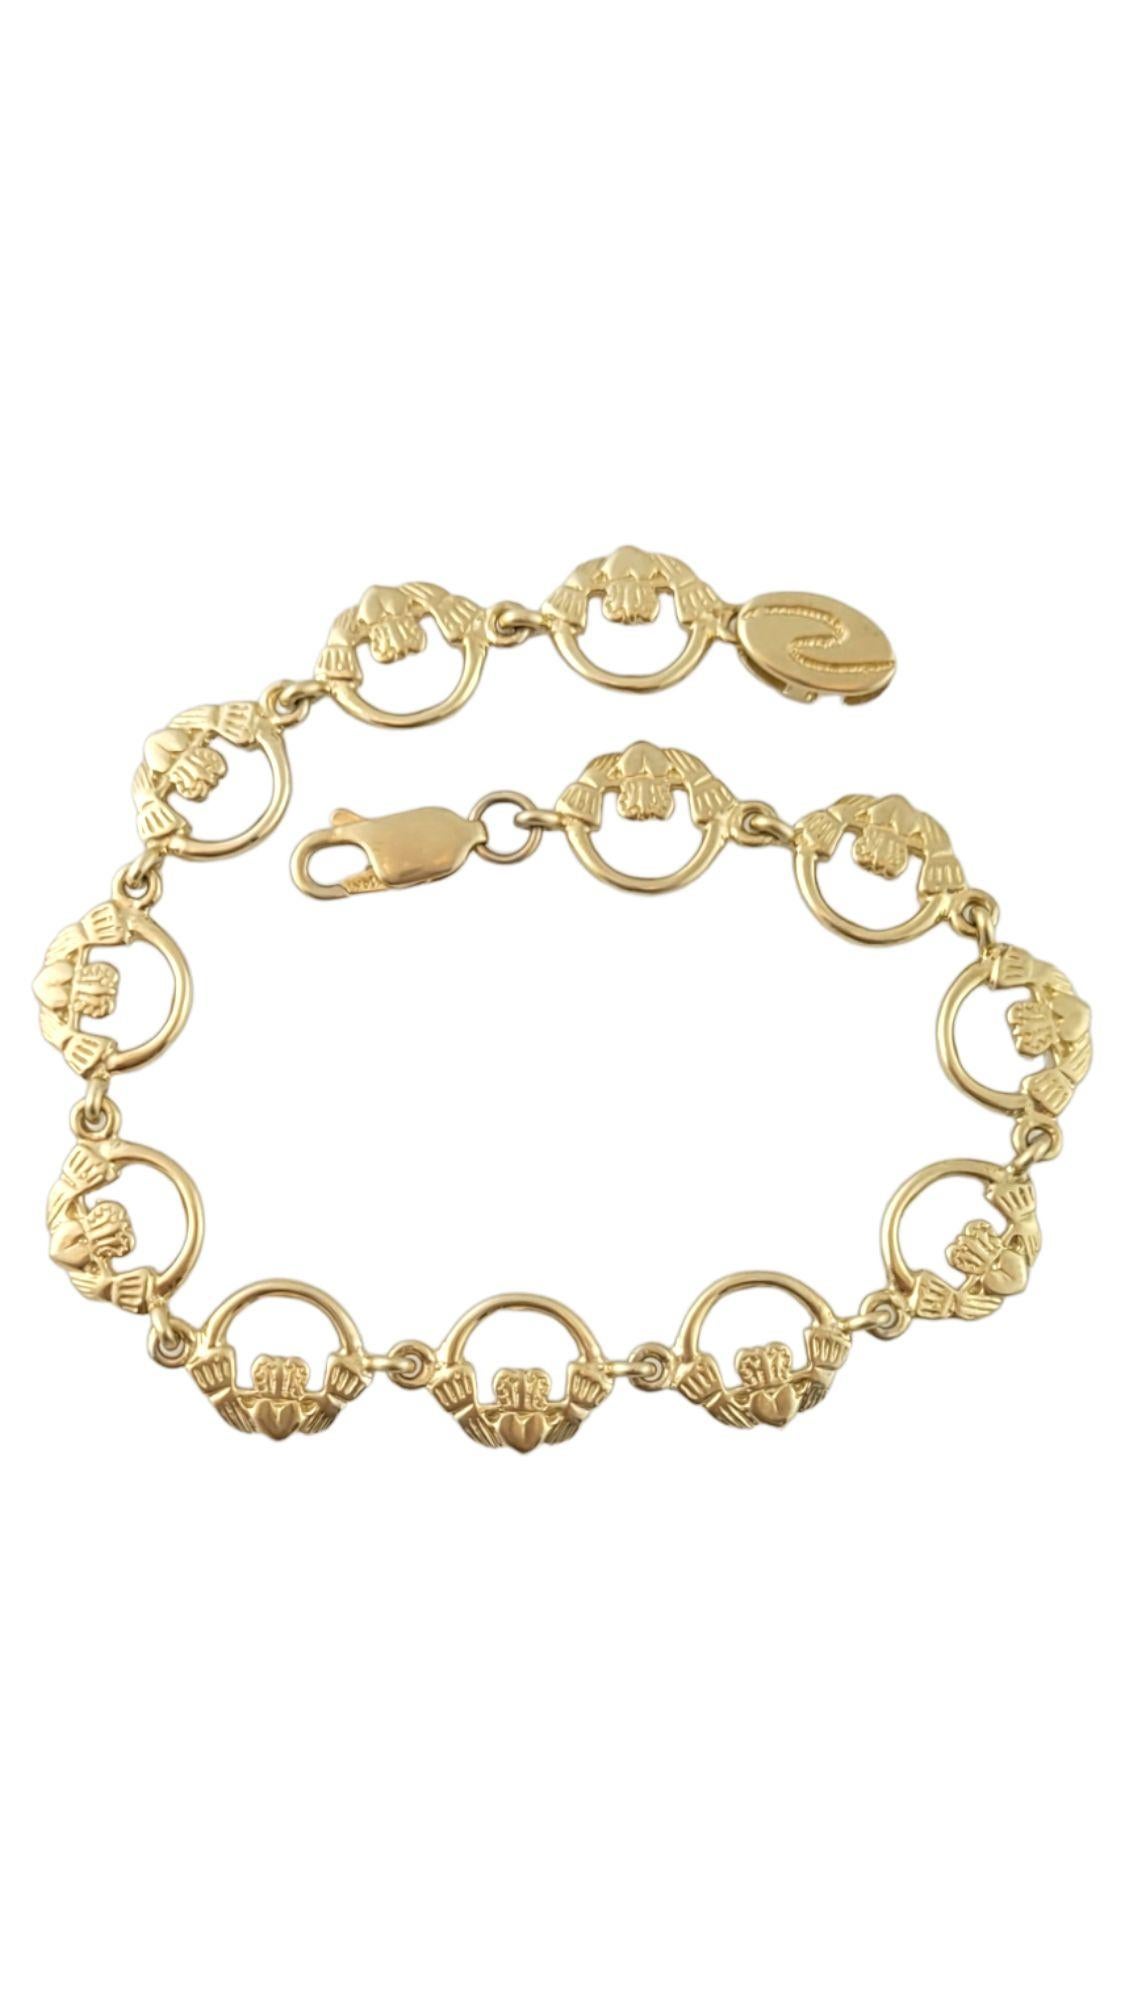 Magnifique bracelet Claddagh en or jaune 14K !

Taille : 7